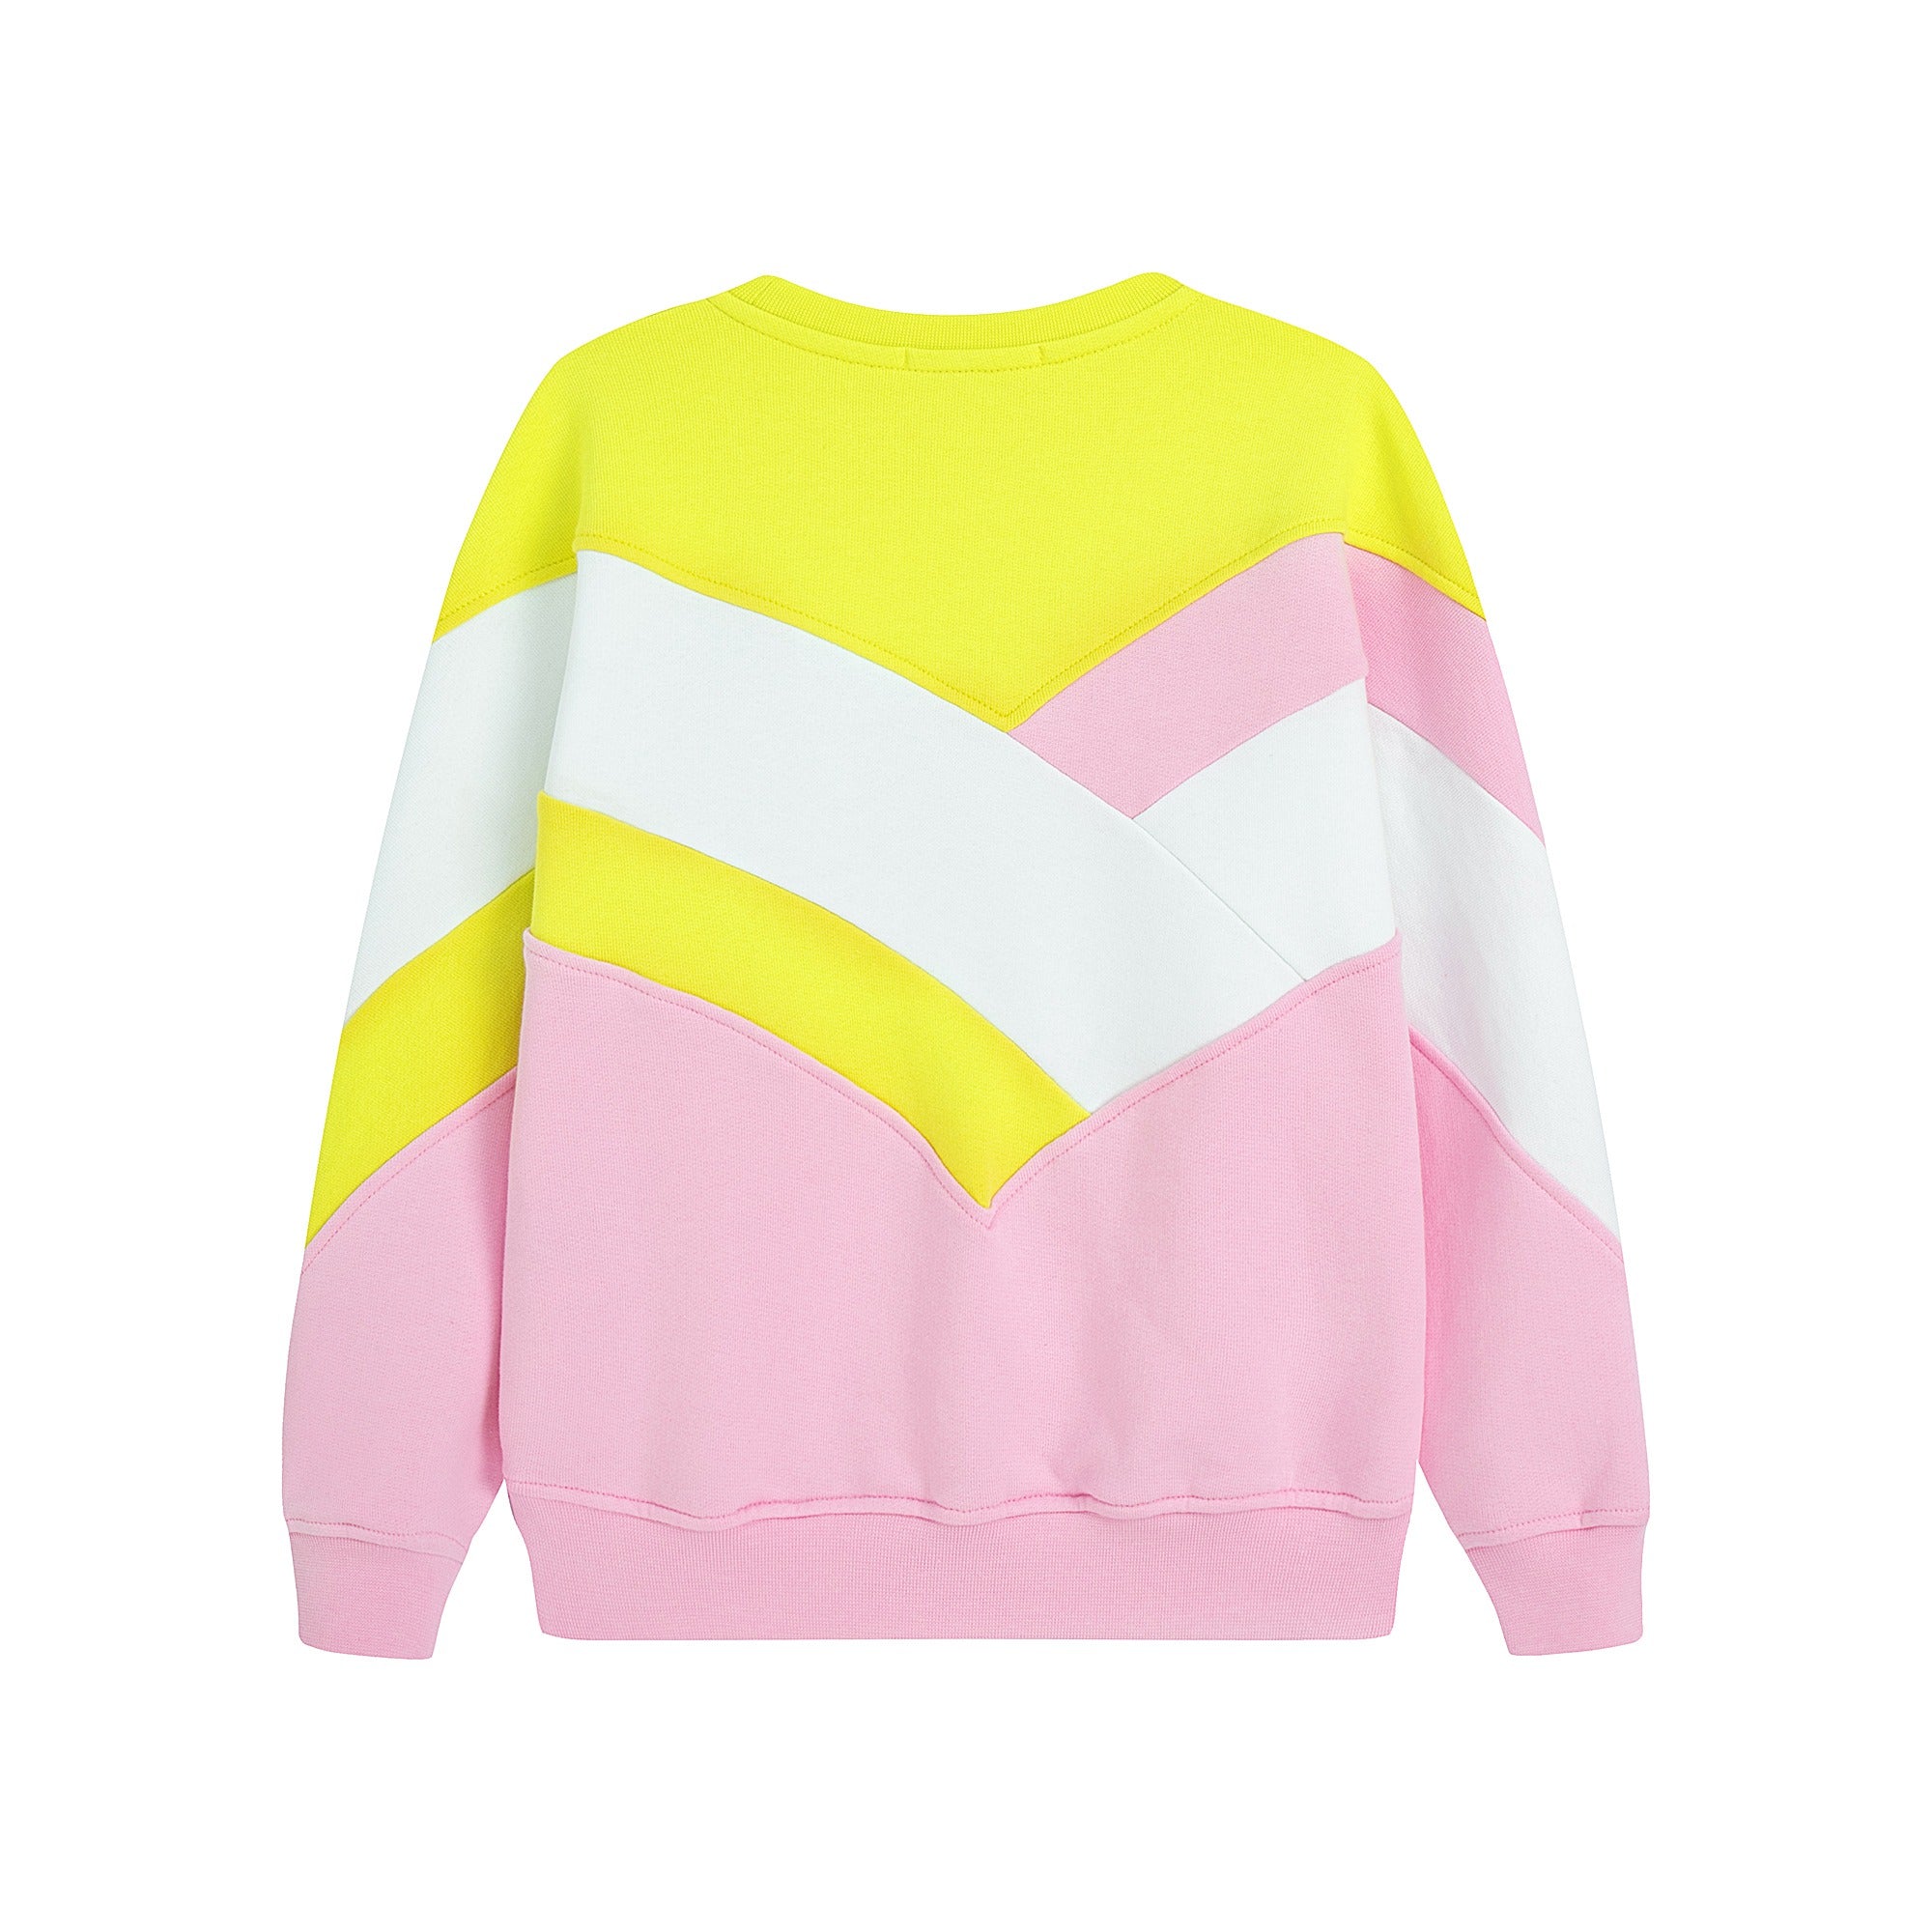 Girls Pink Cotton Sweatshirt